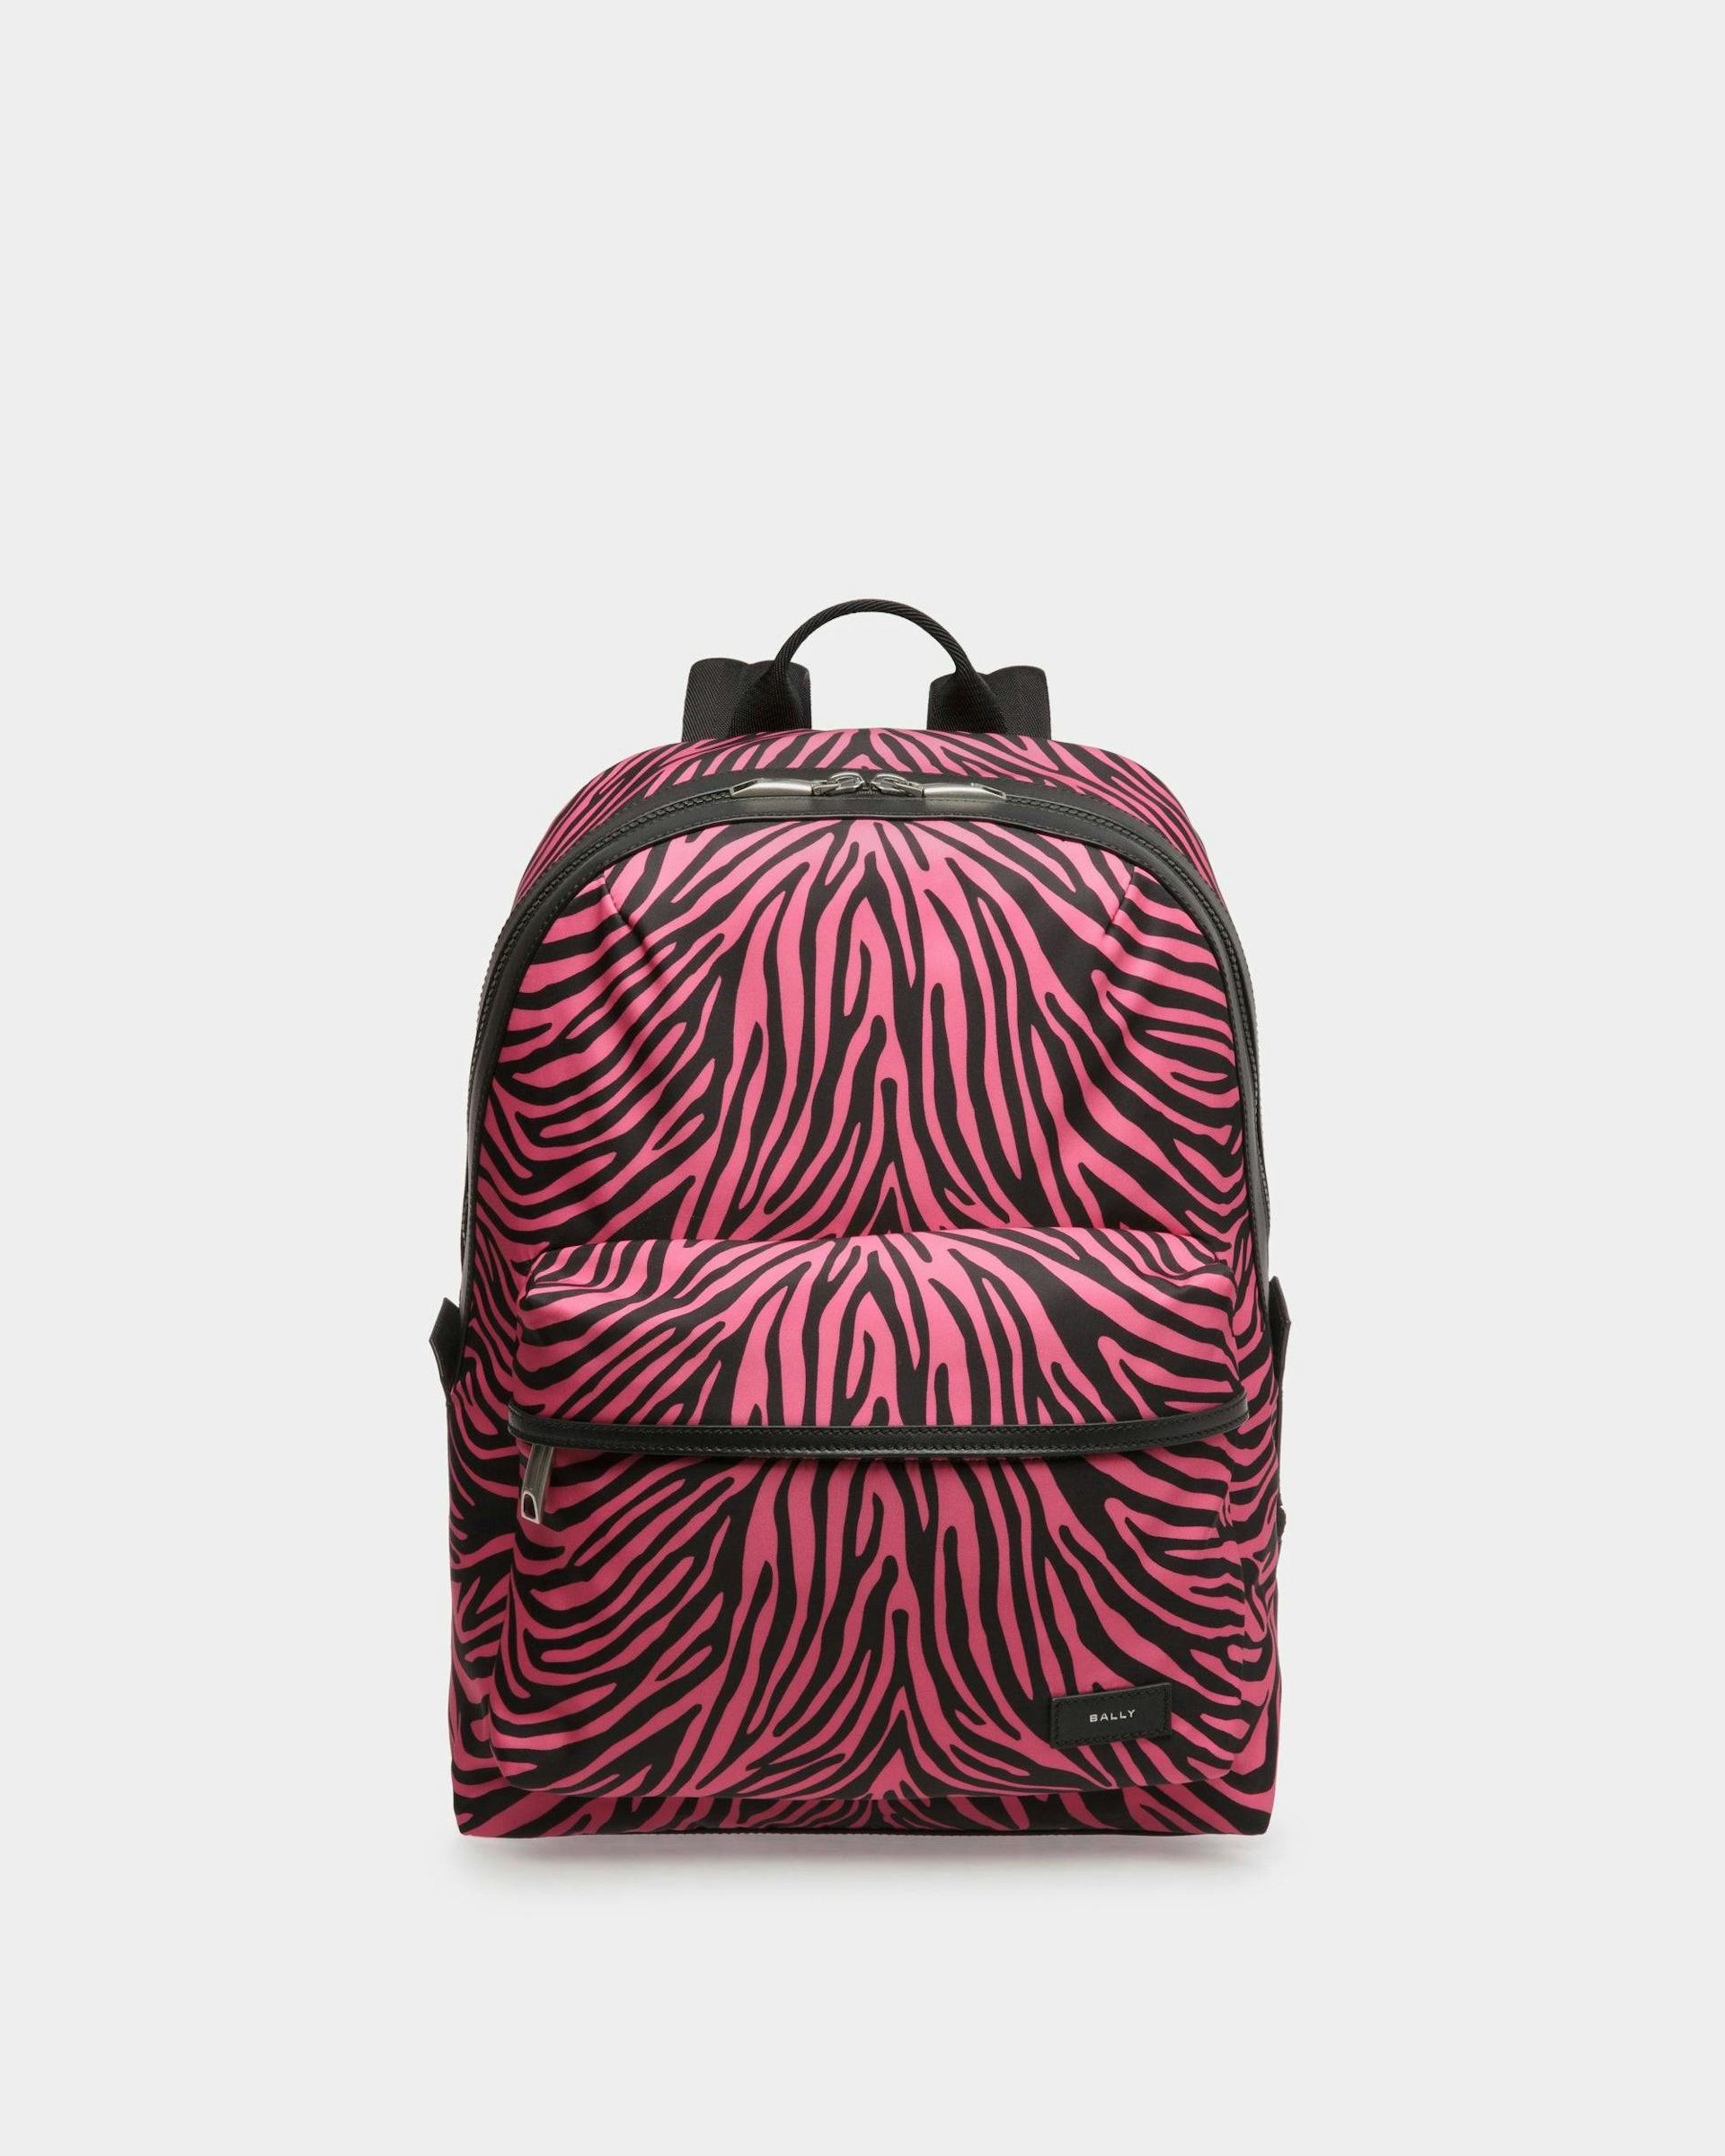 Zebra Crossing Backpack - Bally